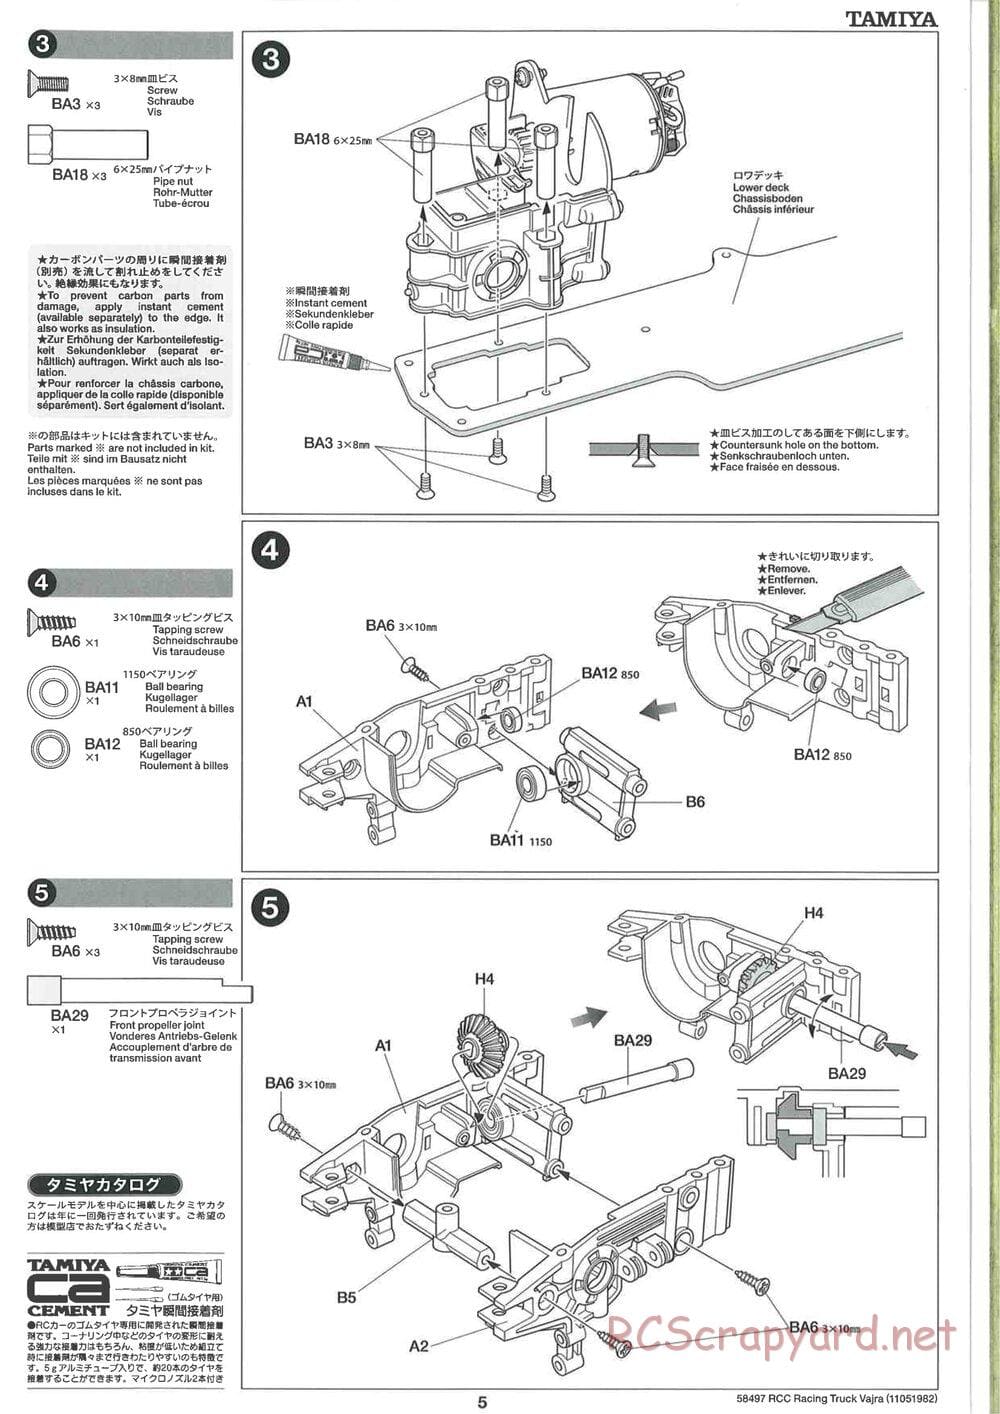 Tamiya - Vajra - AV Chassis - Manual - Page 5